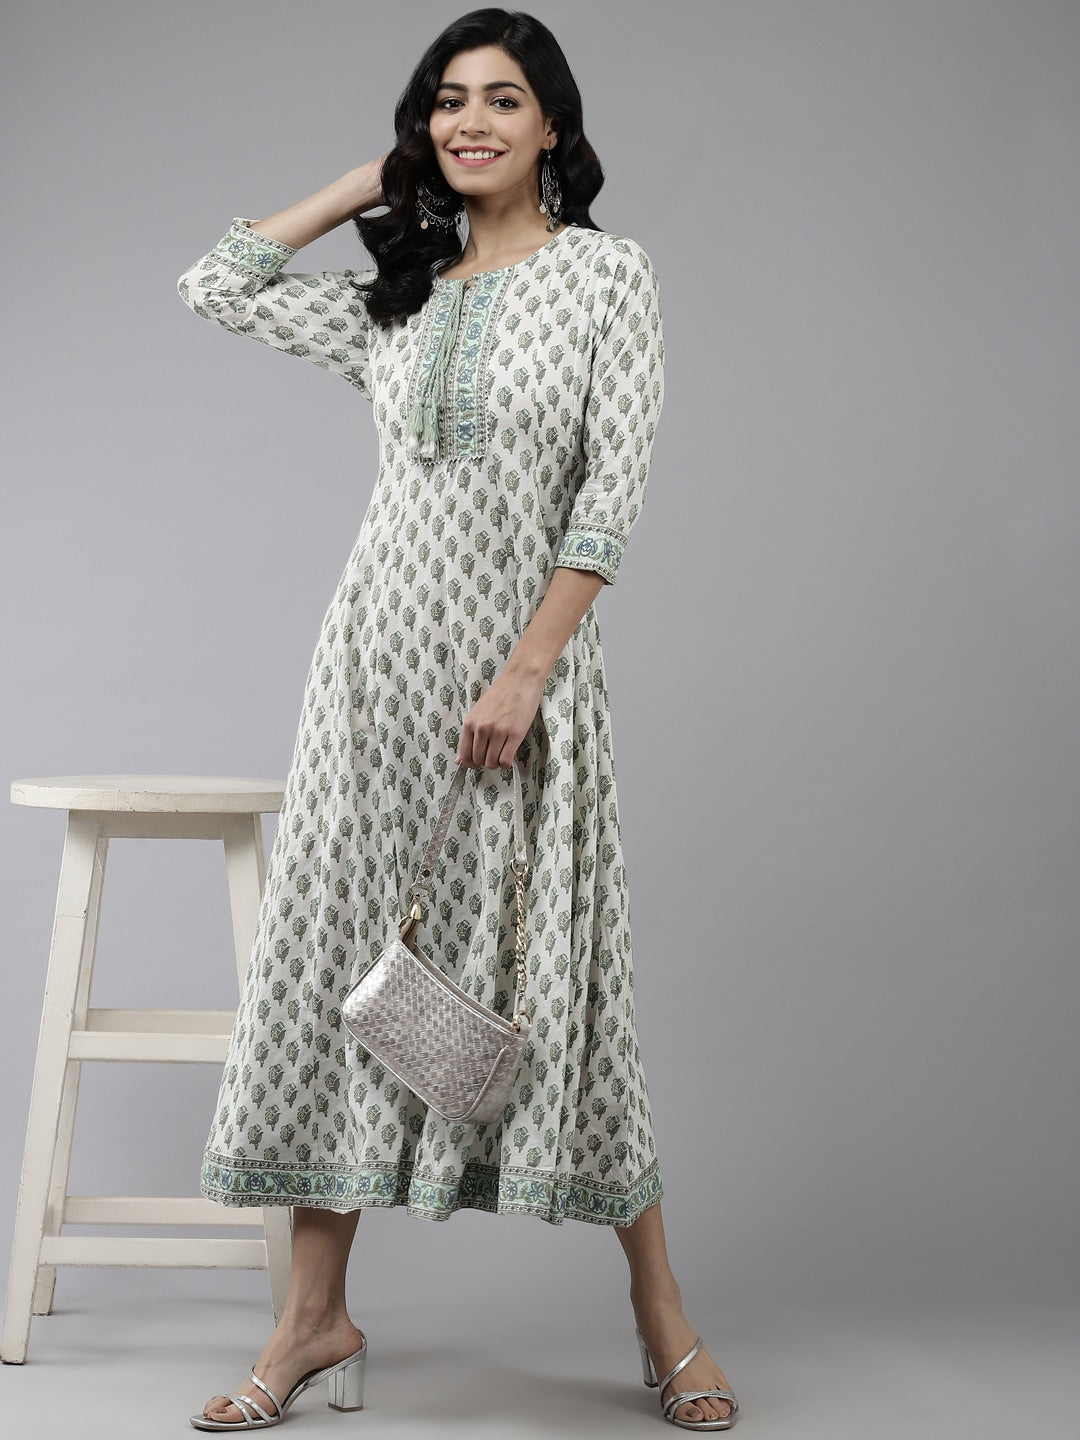 White & Green Ethnic Printed Dress